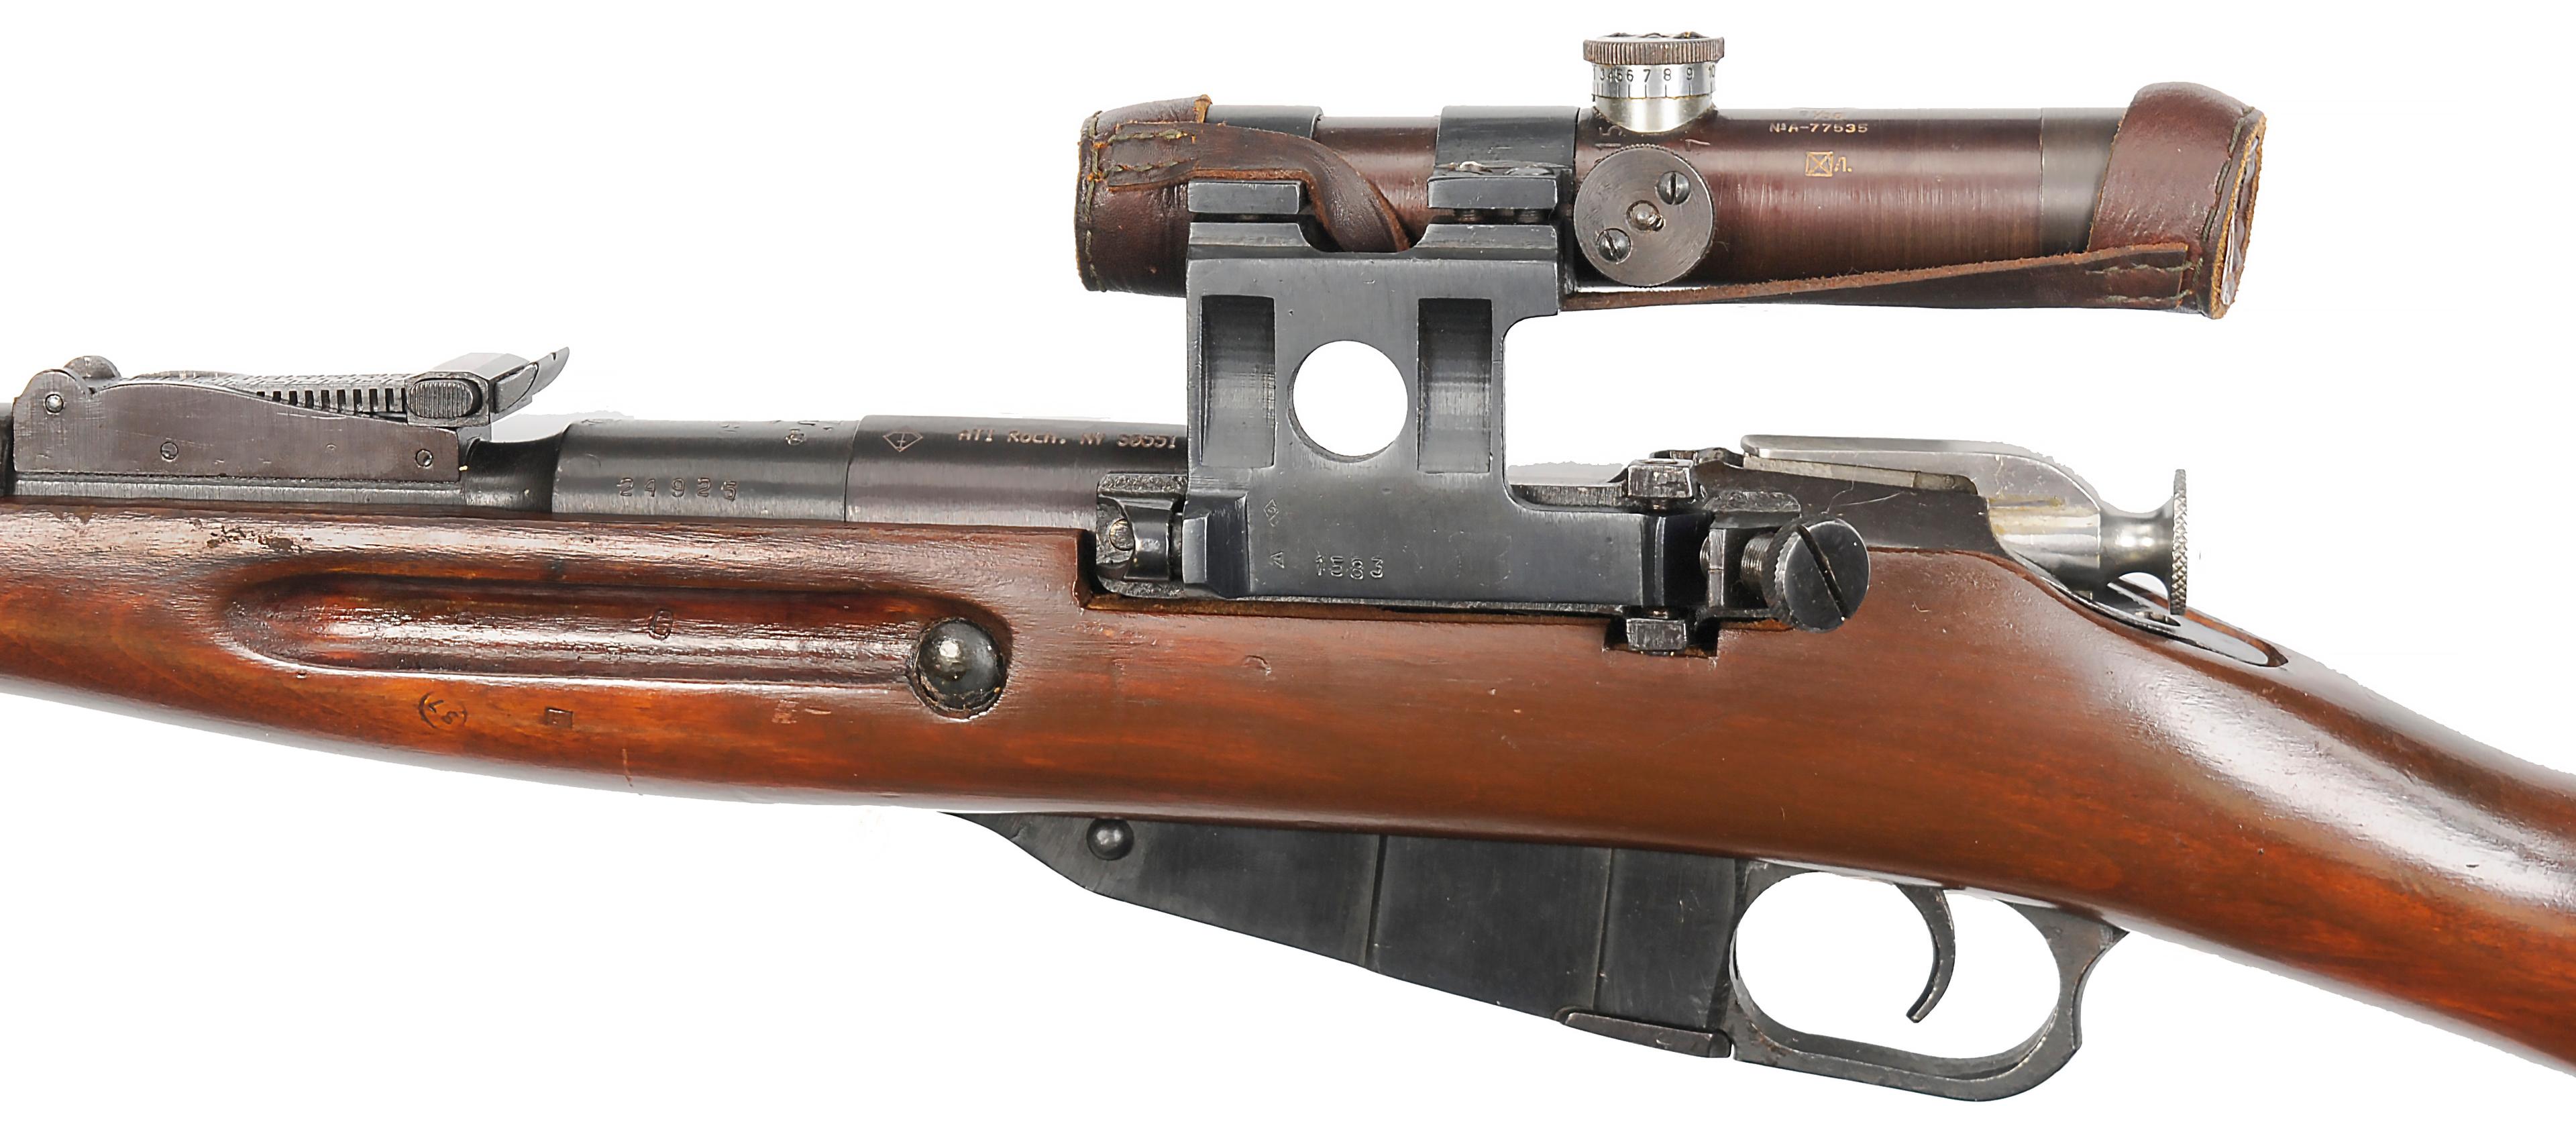 Soviet Military WWII era 91/30 7.62x54r Bolt-Action Sniper Rifle - FFL # 24925 (CQQ1)